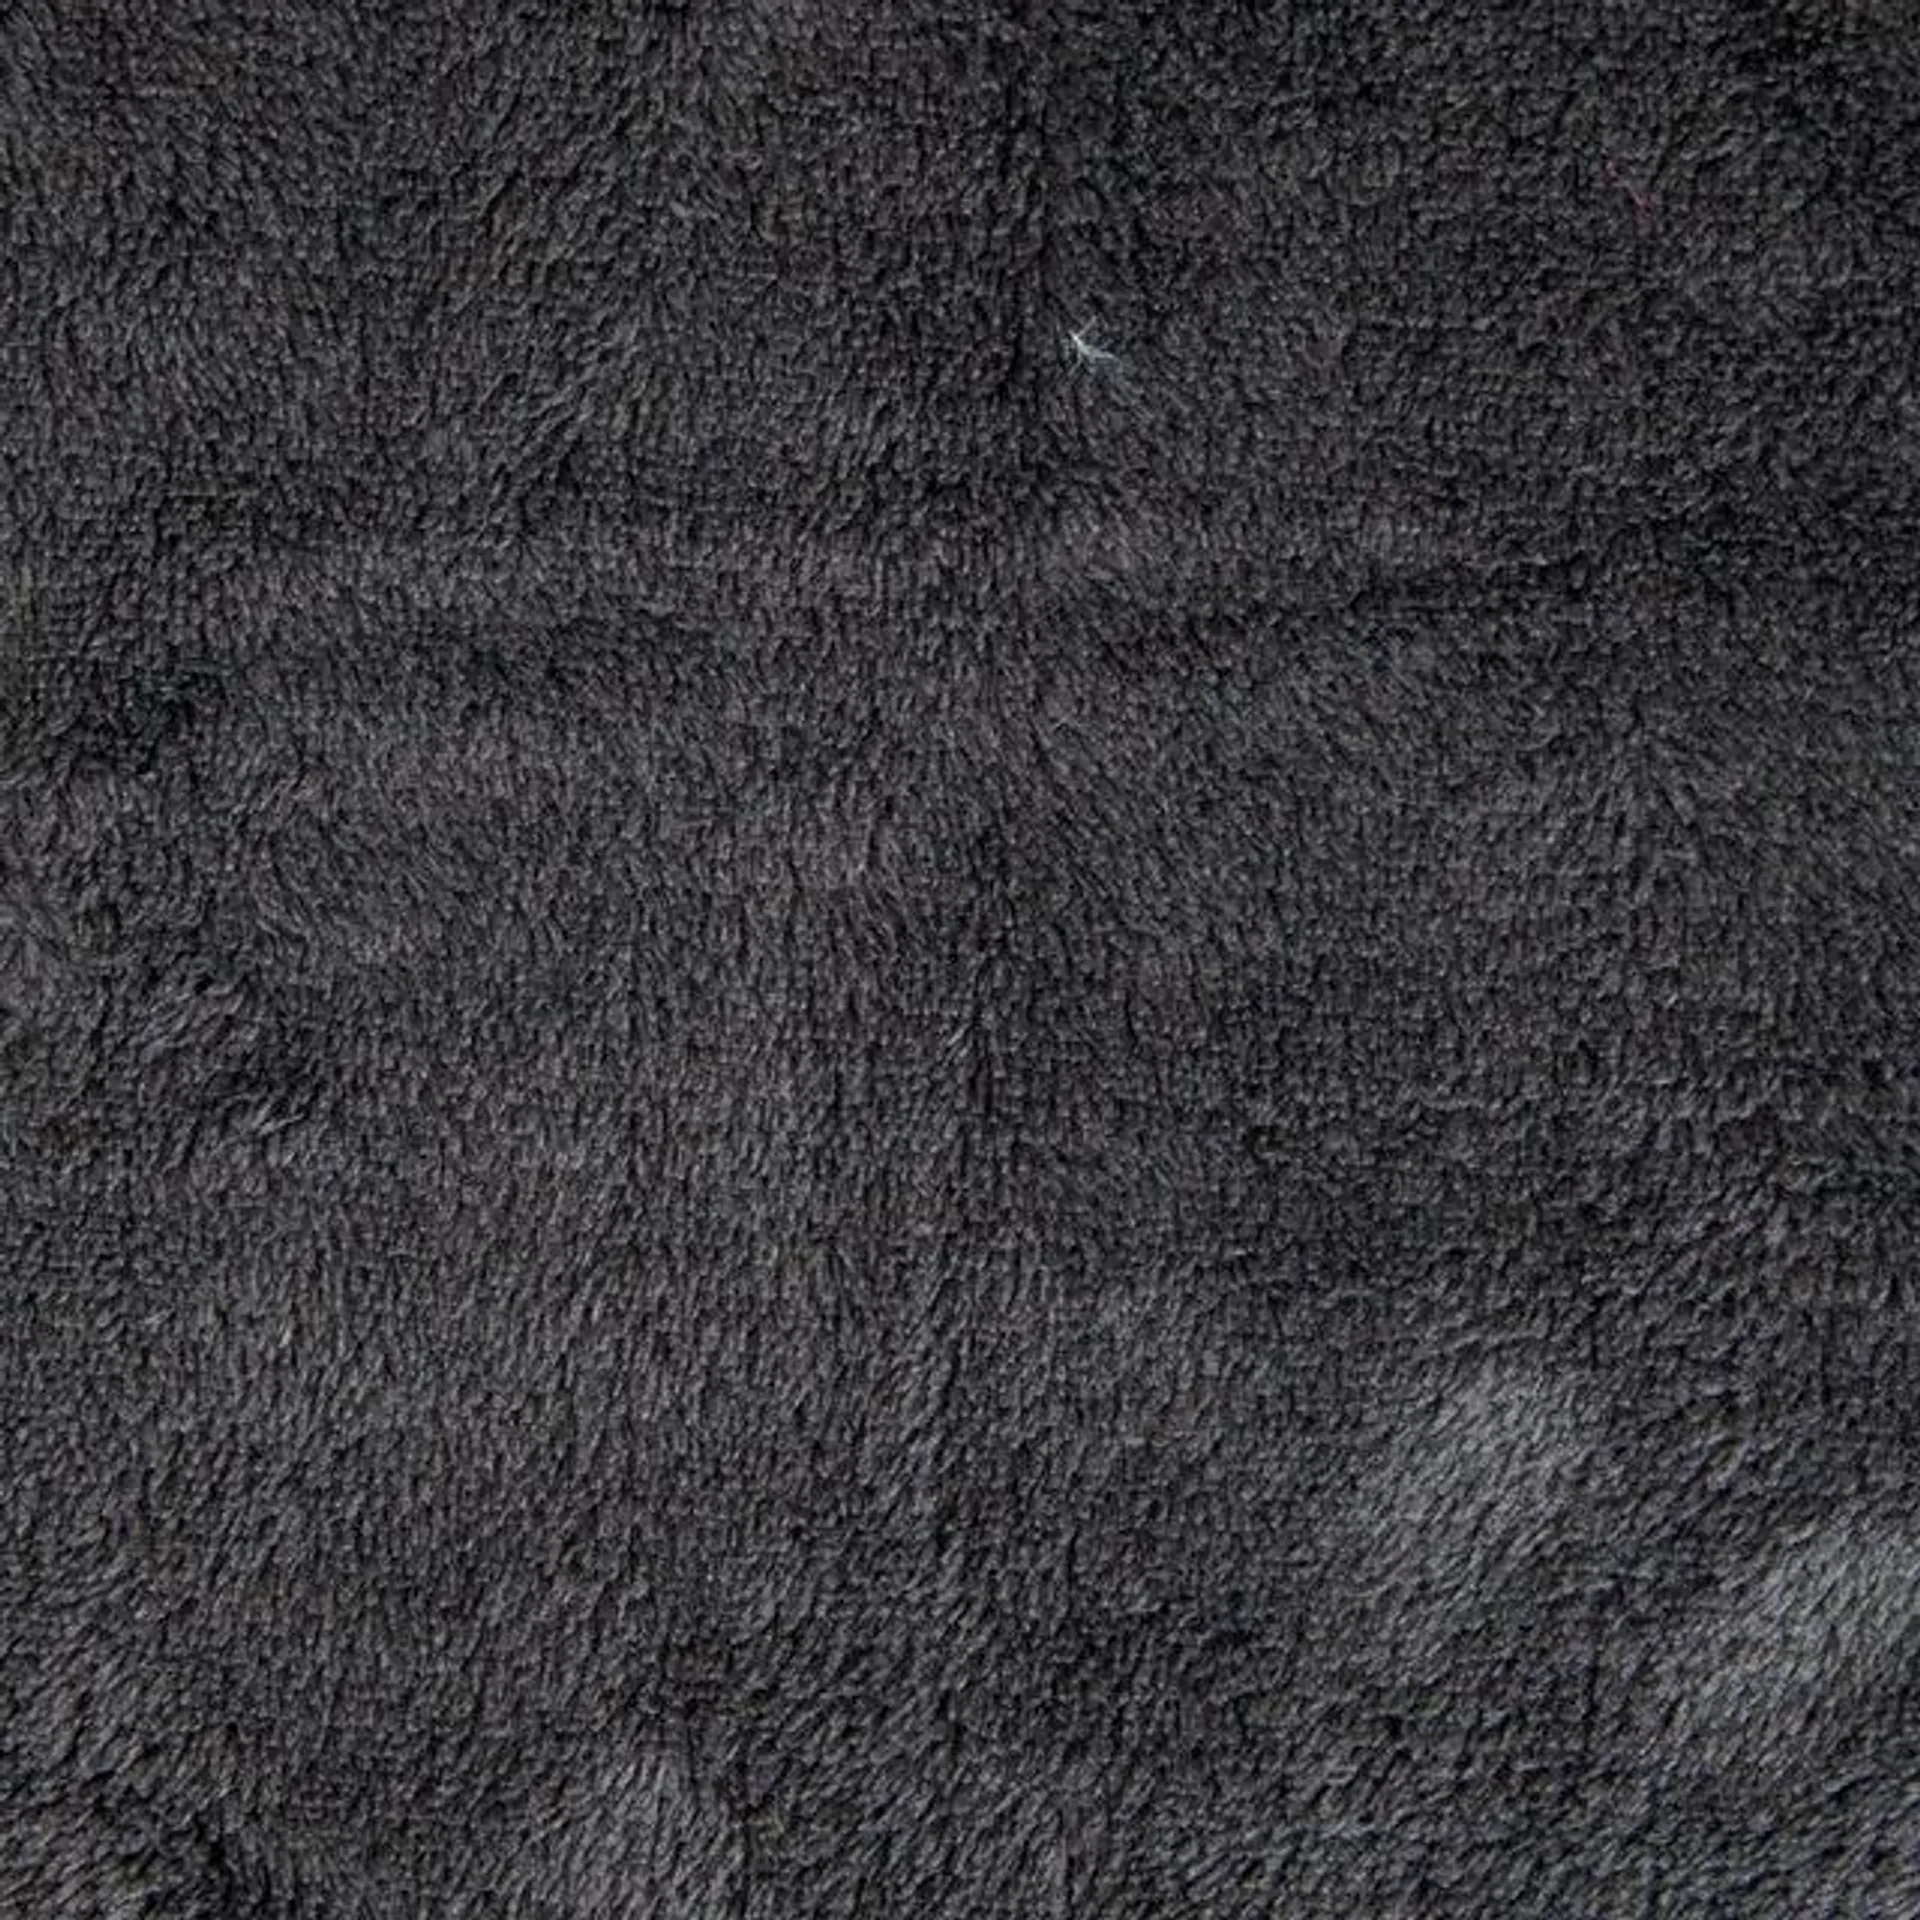 Coral Fleece Plain Fabric, Grey- Width 155cm